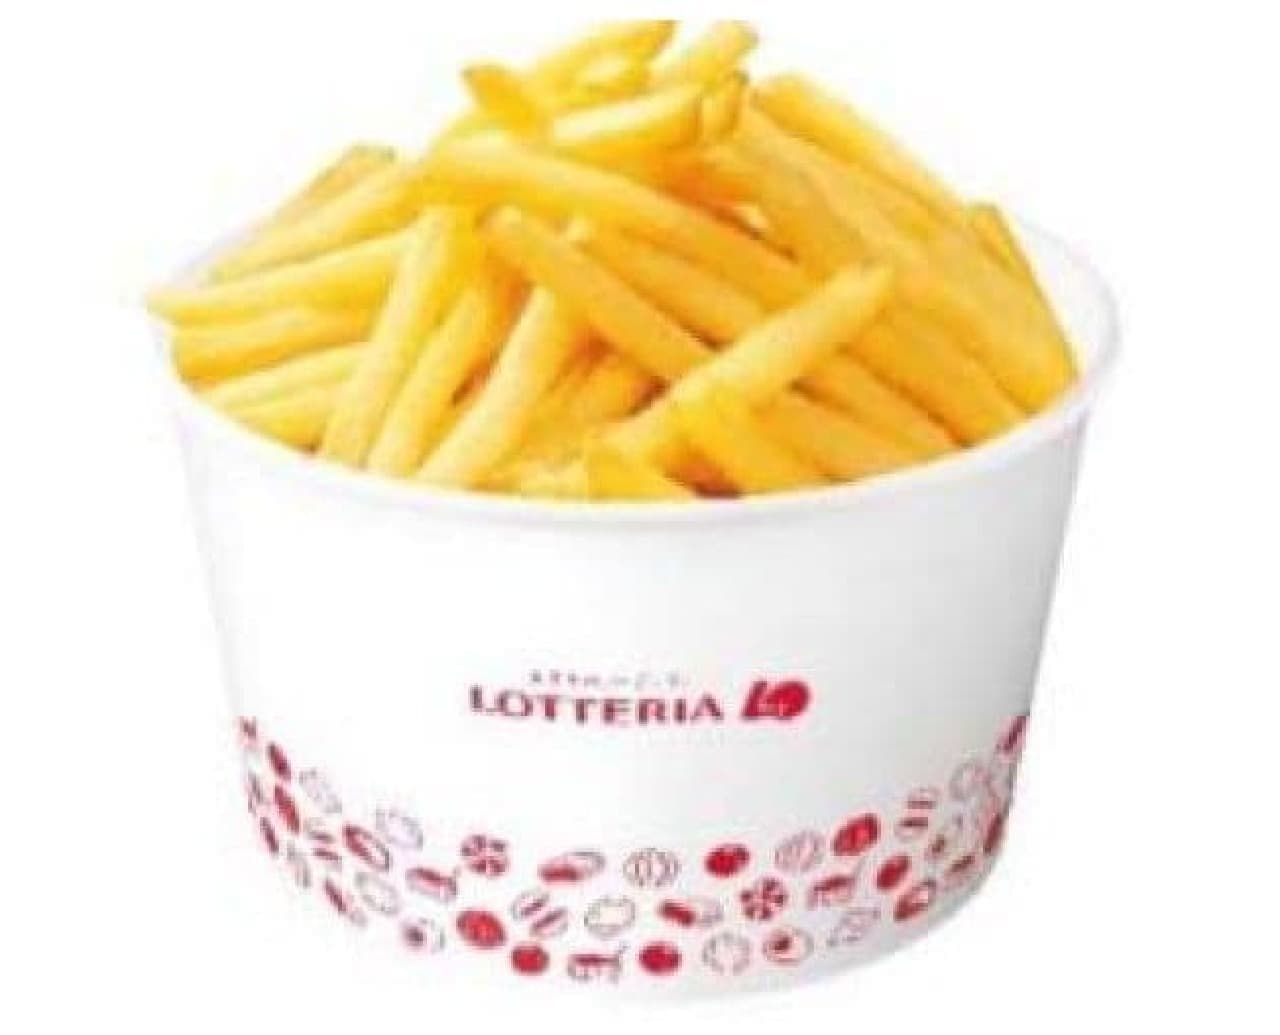 Lotteria "bucket potato"